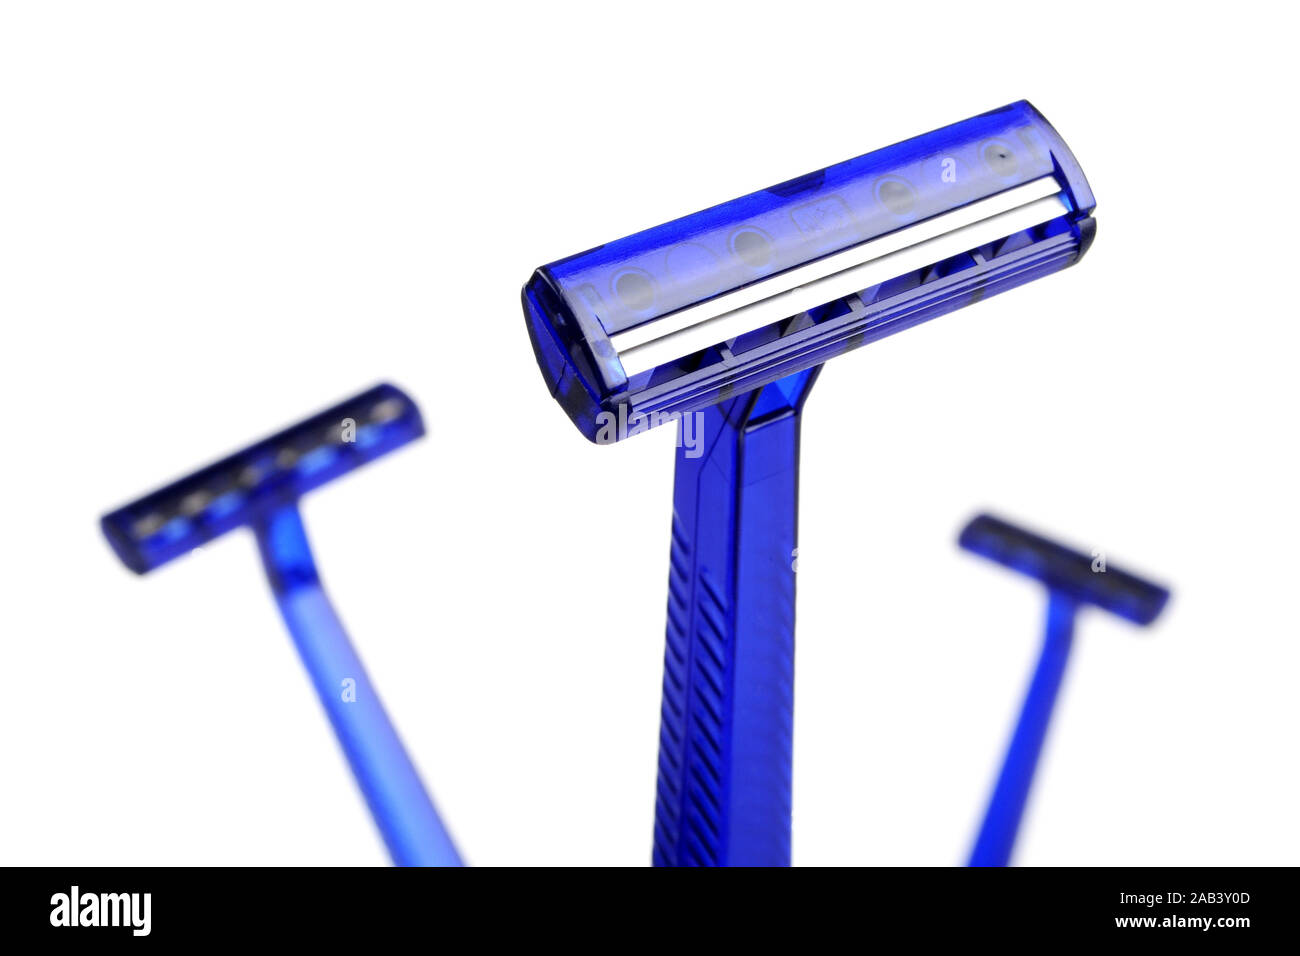 Einwegrasierer |Disposable razor| Stock Photo